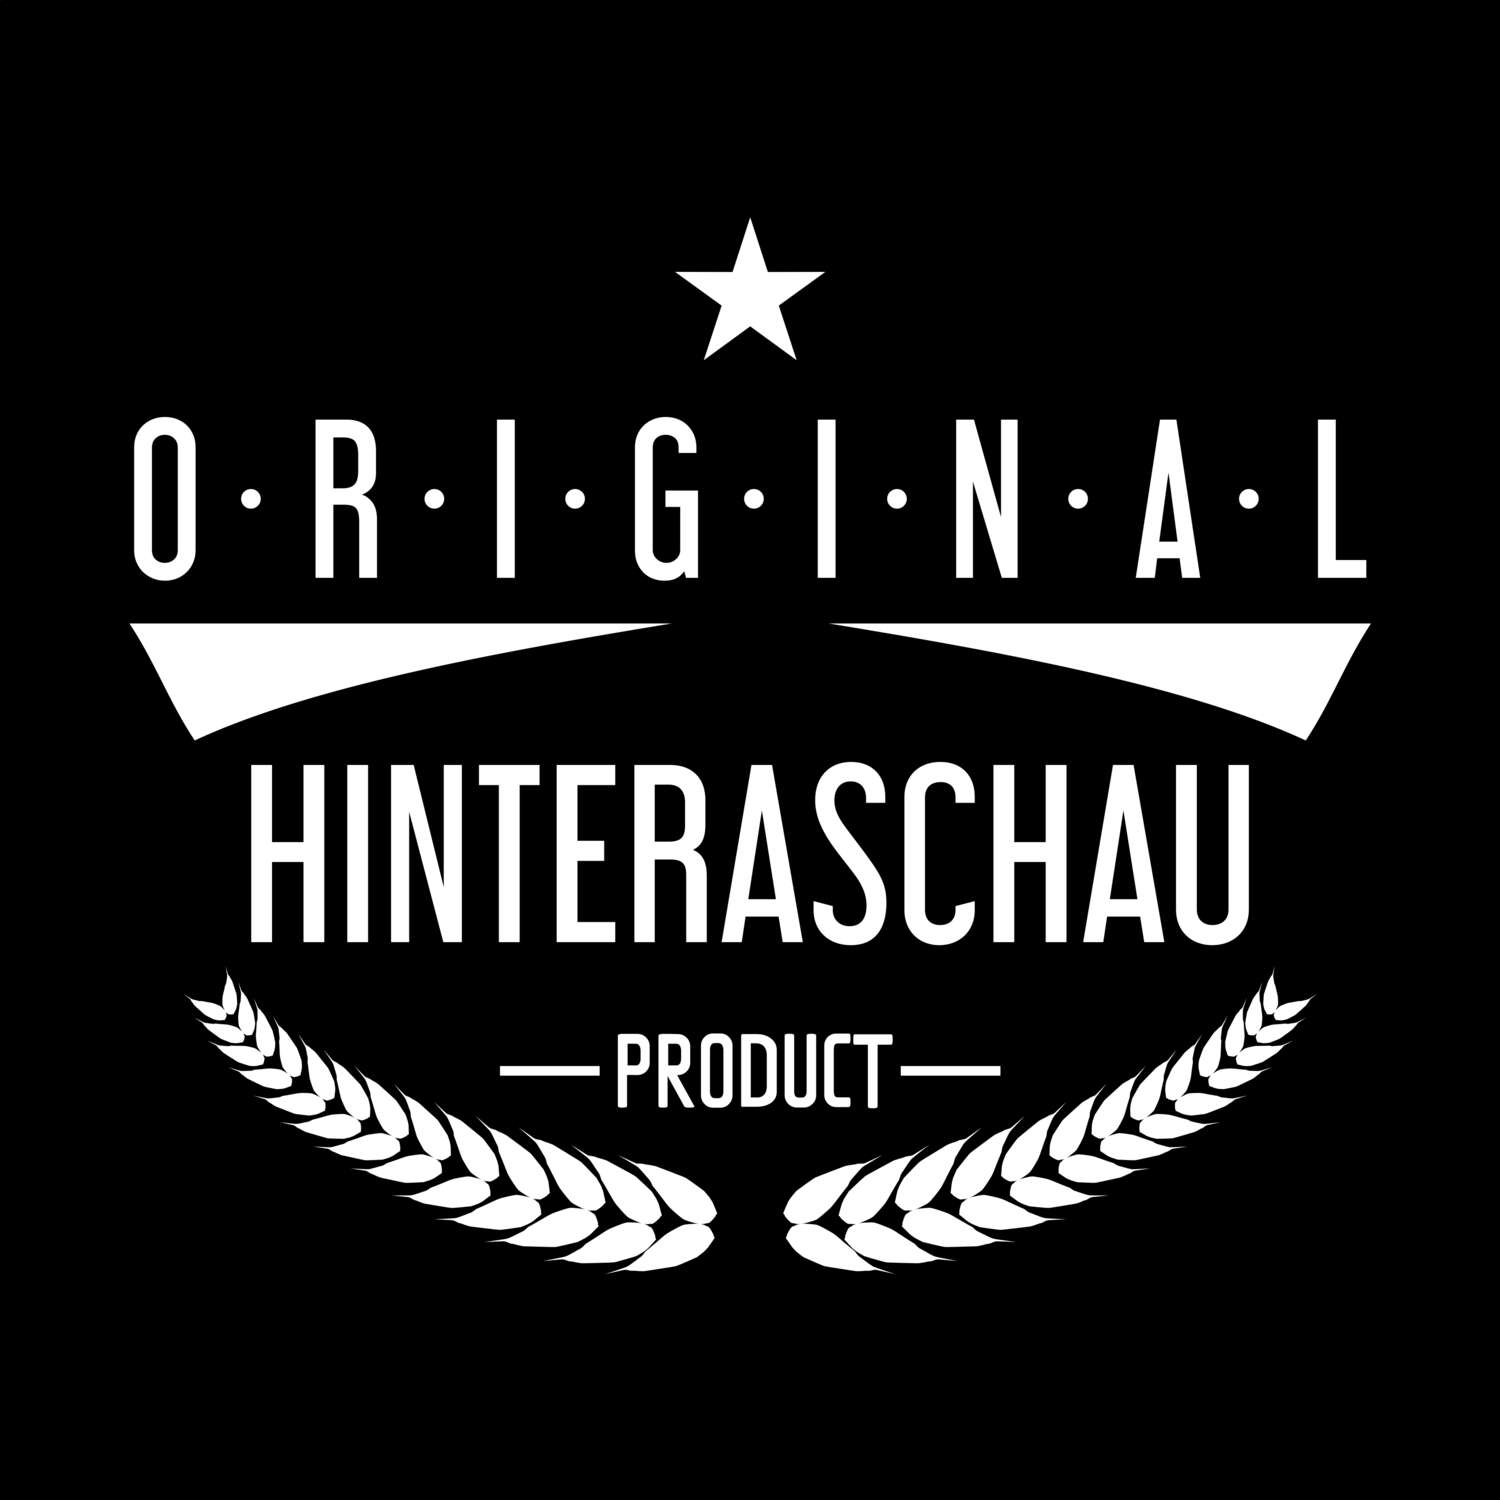 Hinteraschau T-Shirt »Original Product«